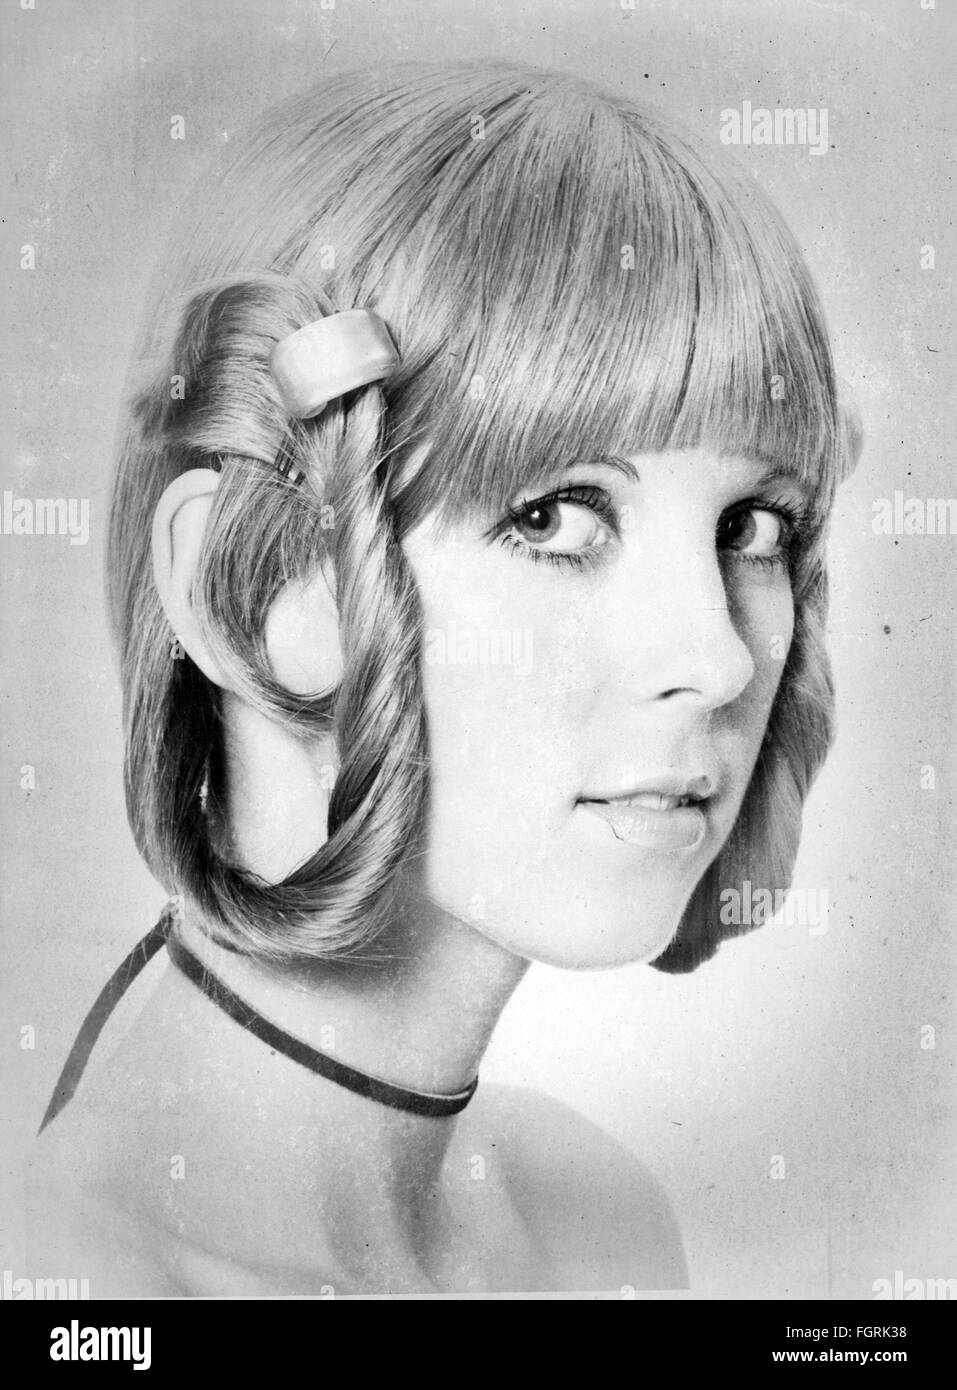 Mode 70er Jahre Frisuren Frauenhaarschnitt 1970 Additional Rights Clearences Not Available Stockfotografie Alamy